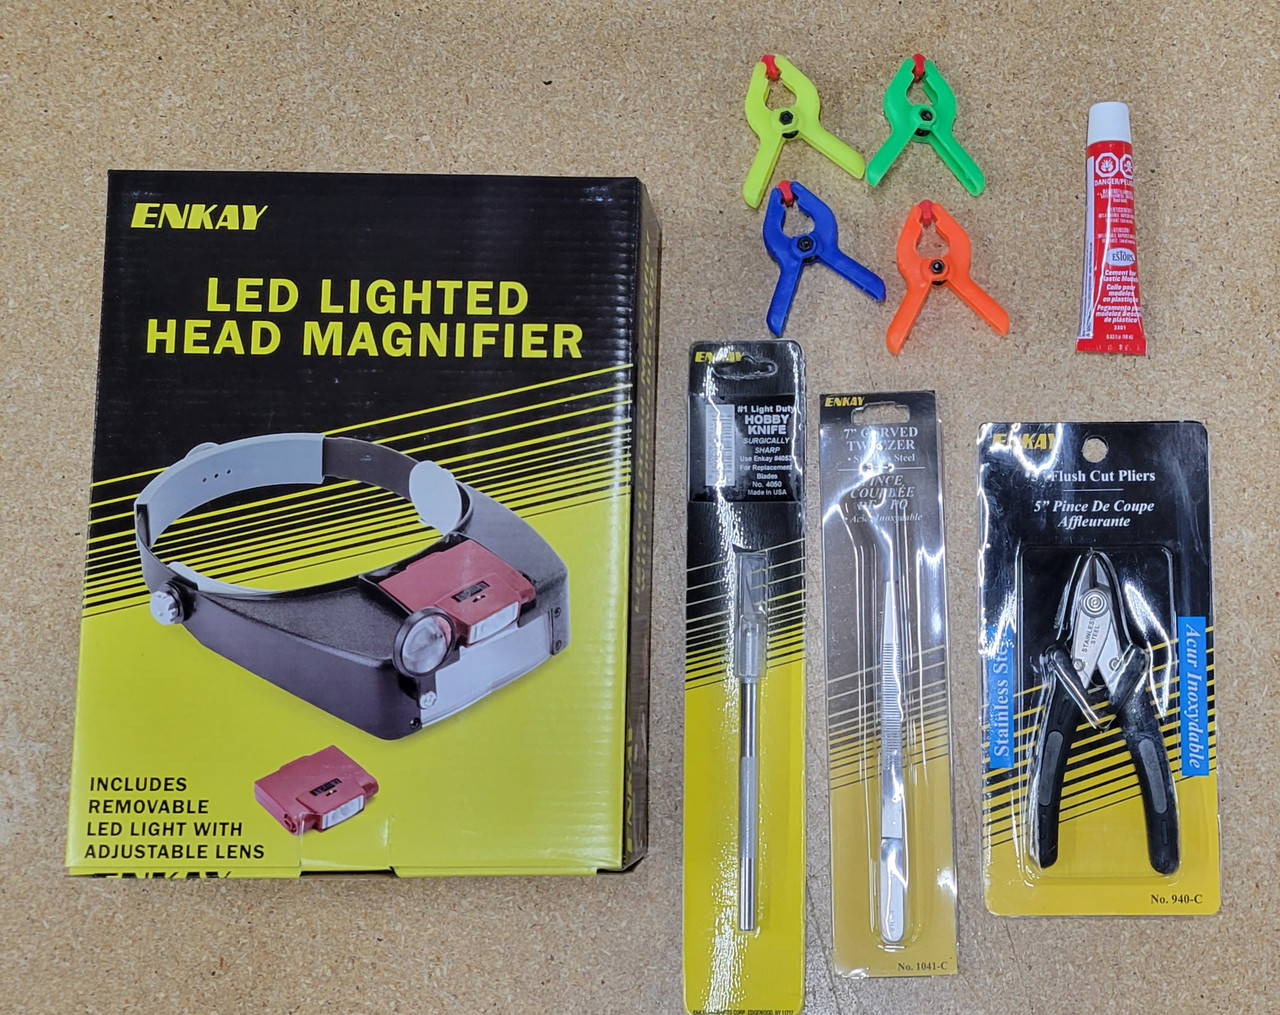 Technical Plastic Model Kit Tool Set